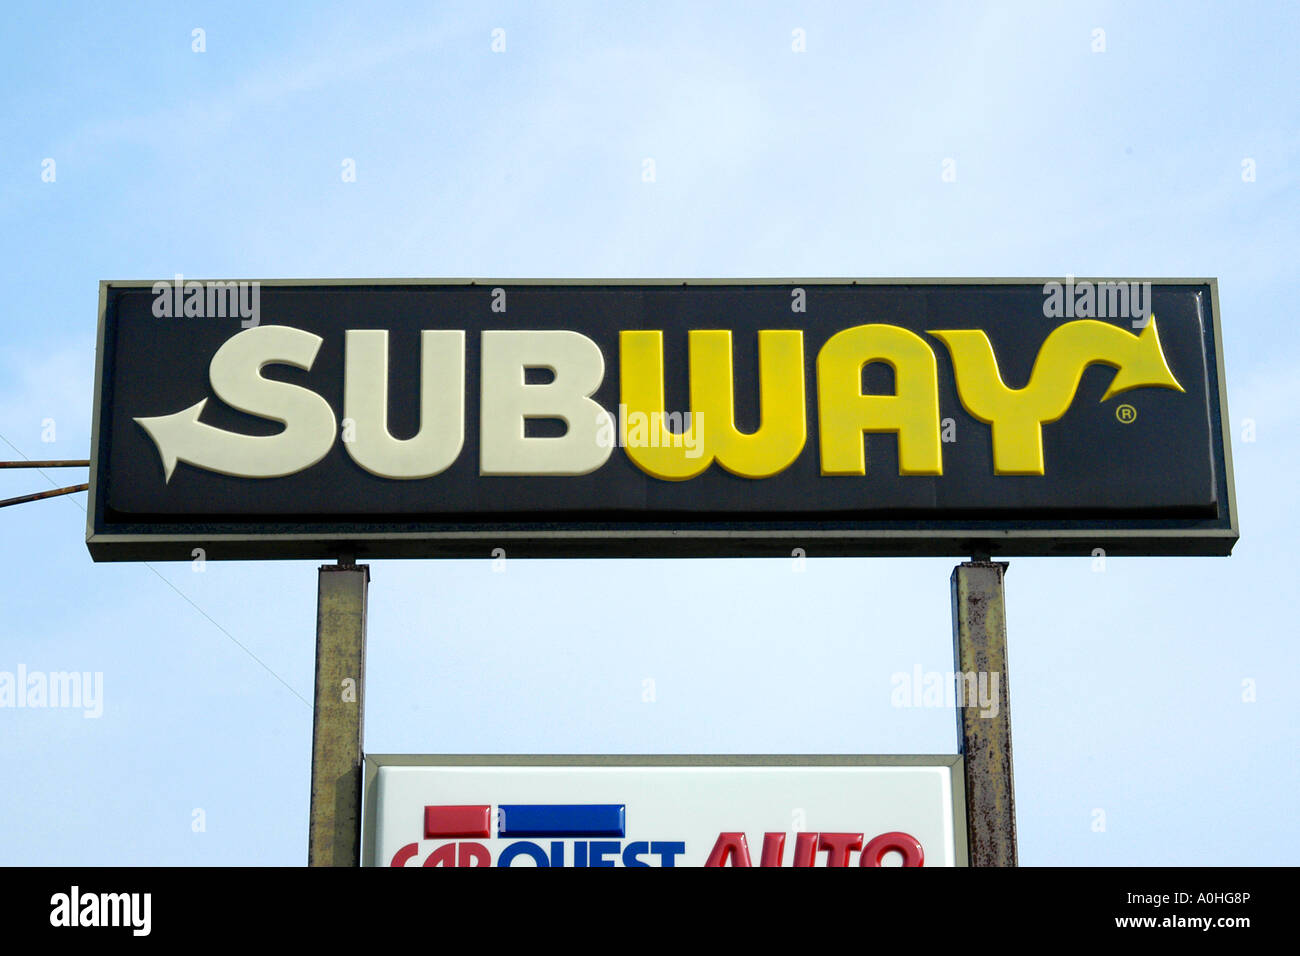 Subway Fast Food Restaurant sign Stock Photo